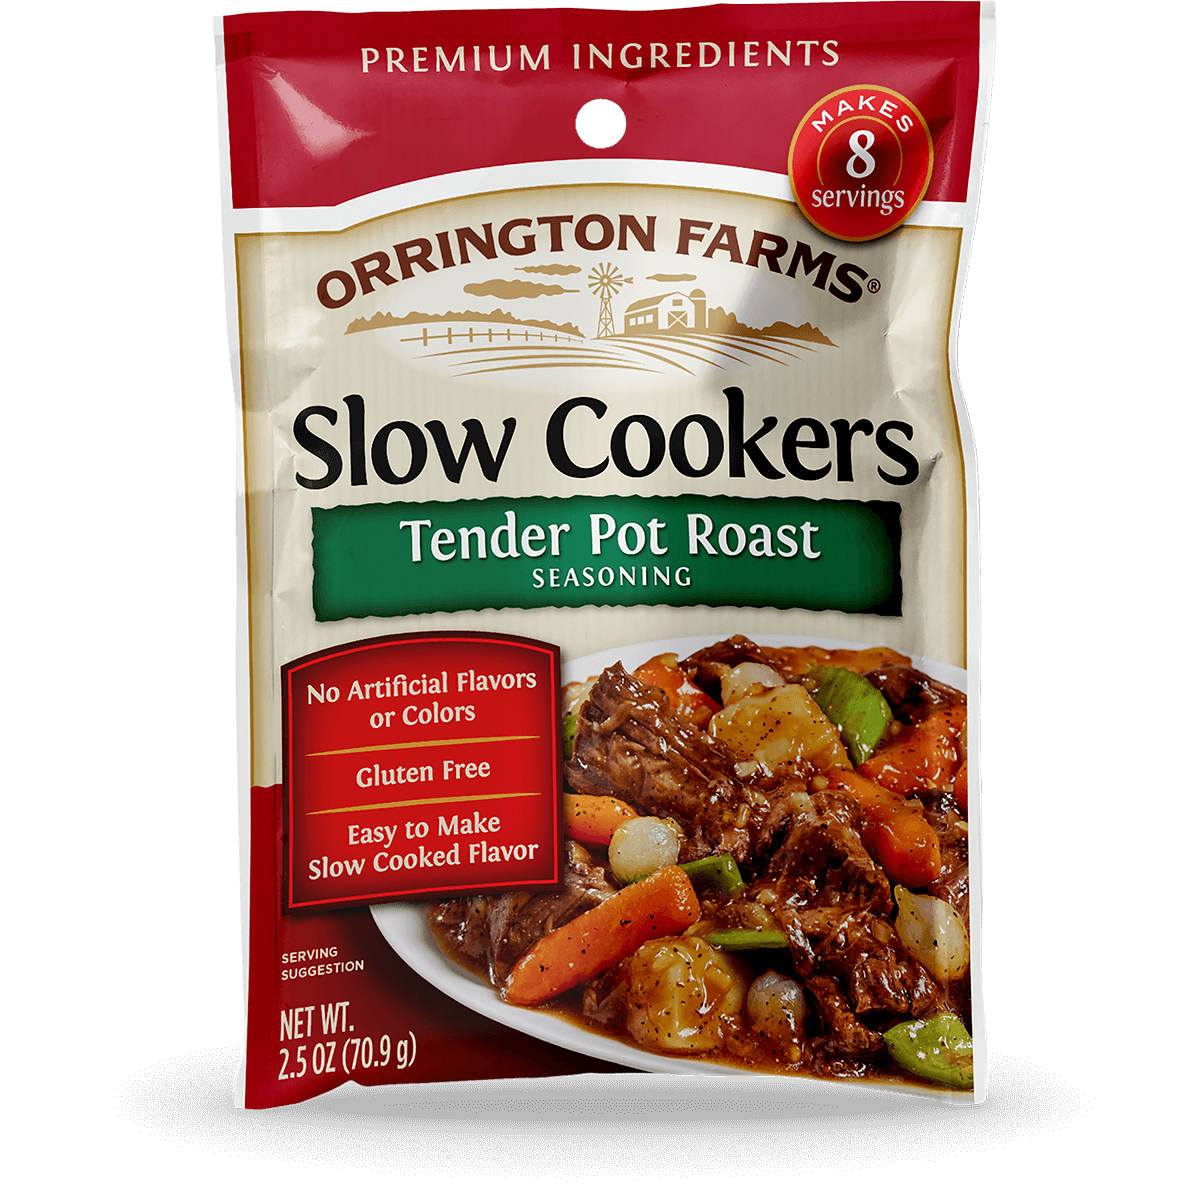 https://www.orringtonfarms.com/wp-content/uploads/2017/12/mockup-packet-orrington-farms-slow-cookers-tender-pot-roast-1200x1200-1.png